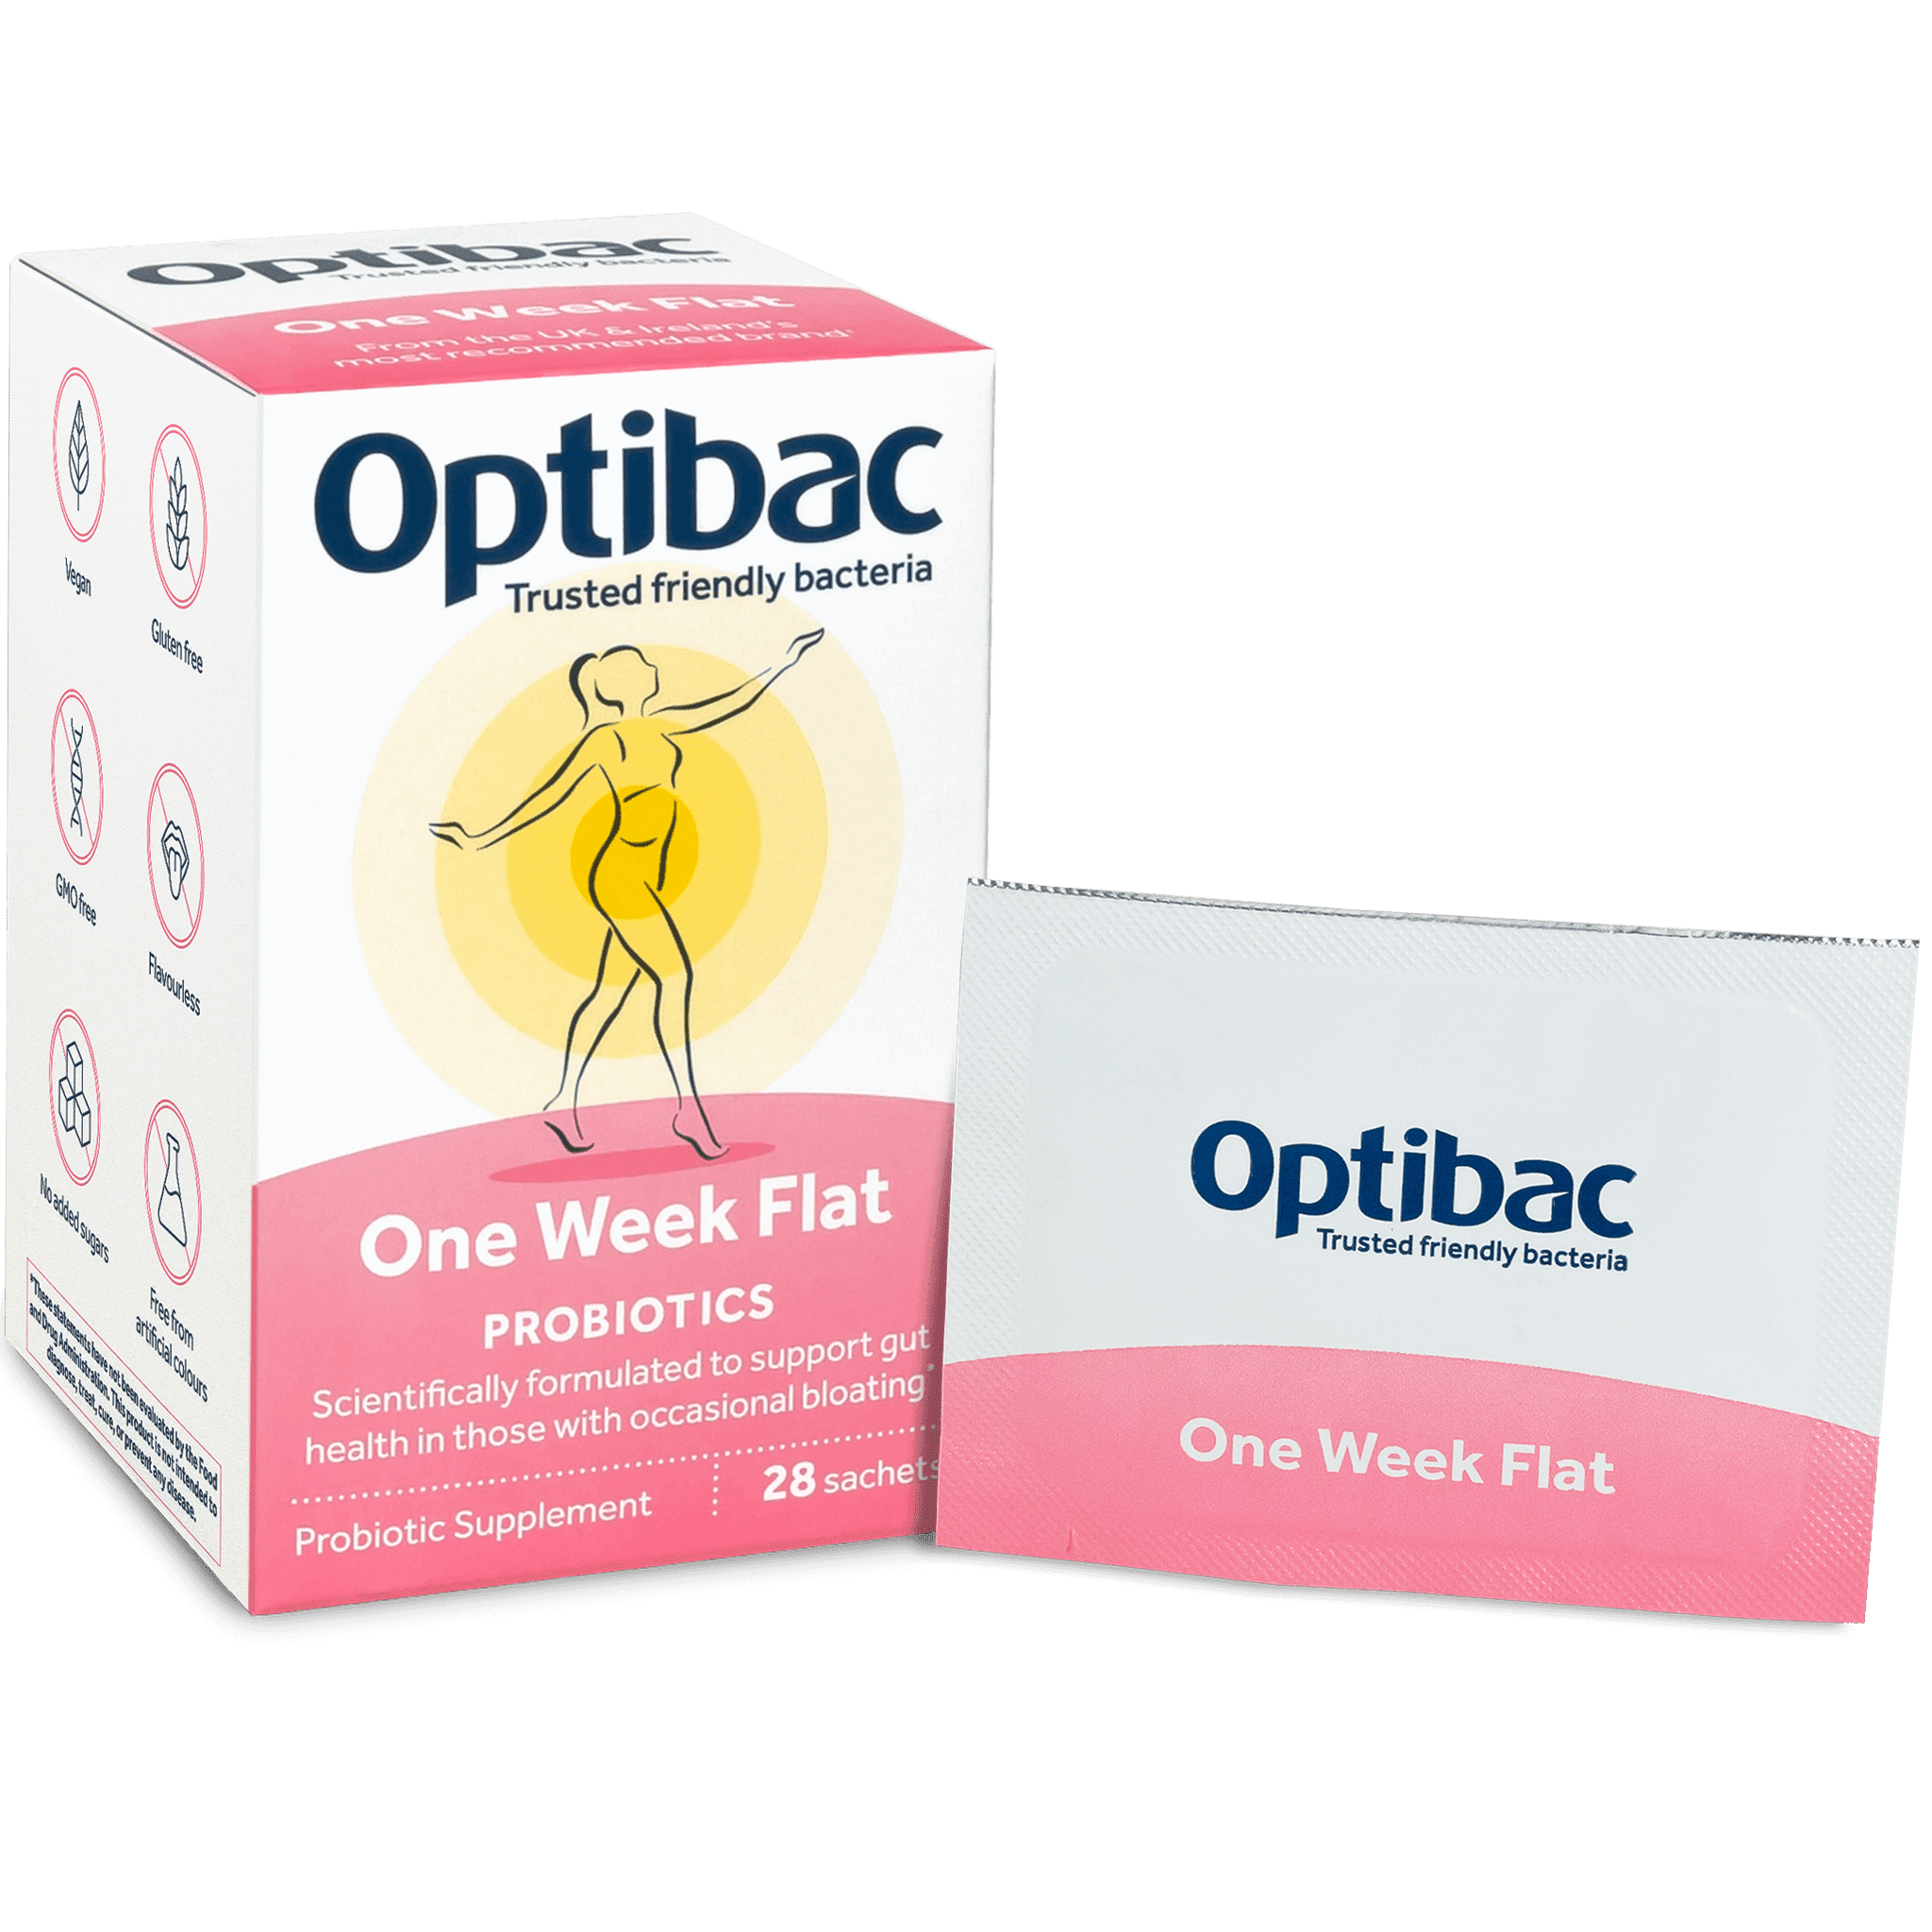 Optibac Probiotics One Week Flat (28 sachets) pack contents